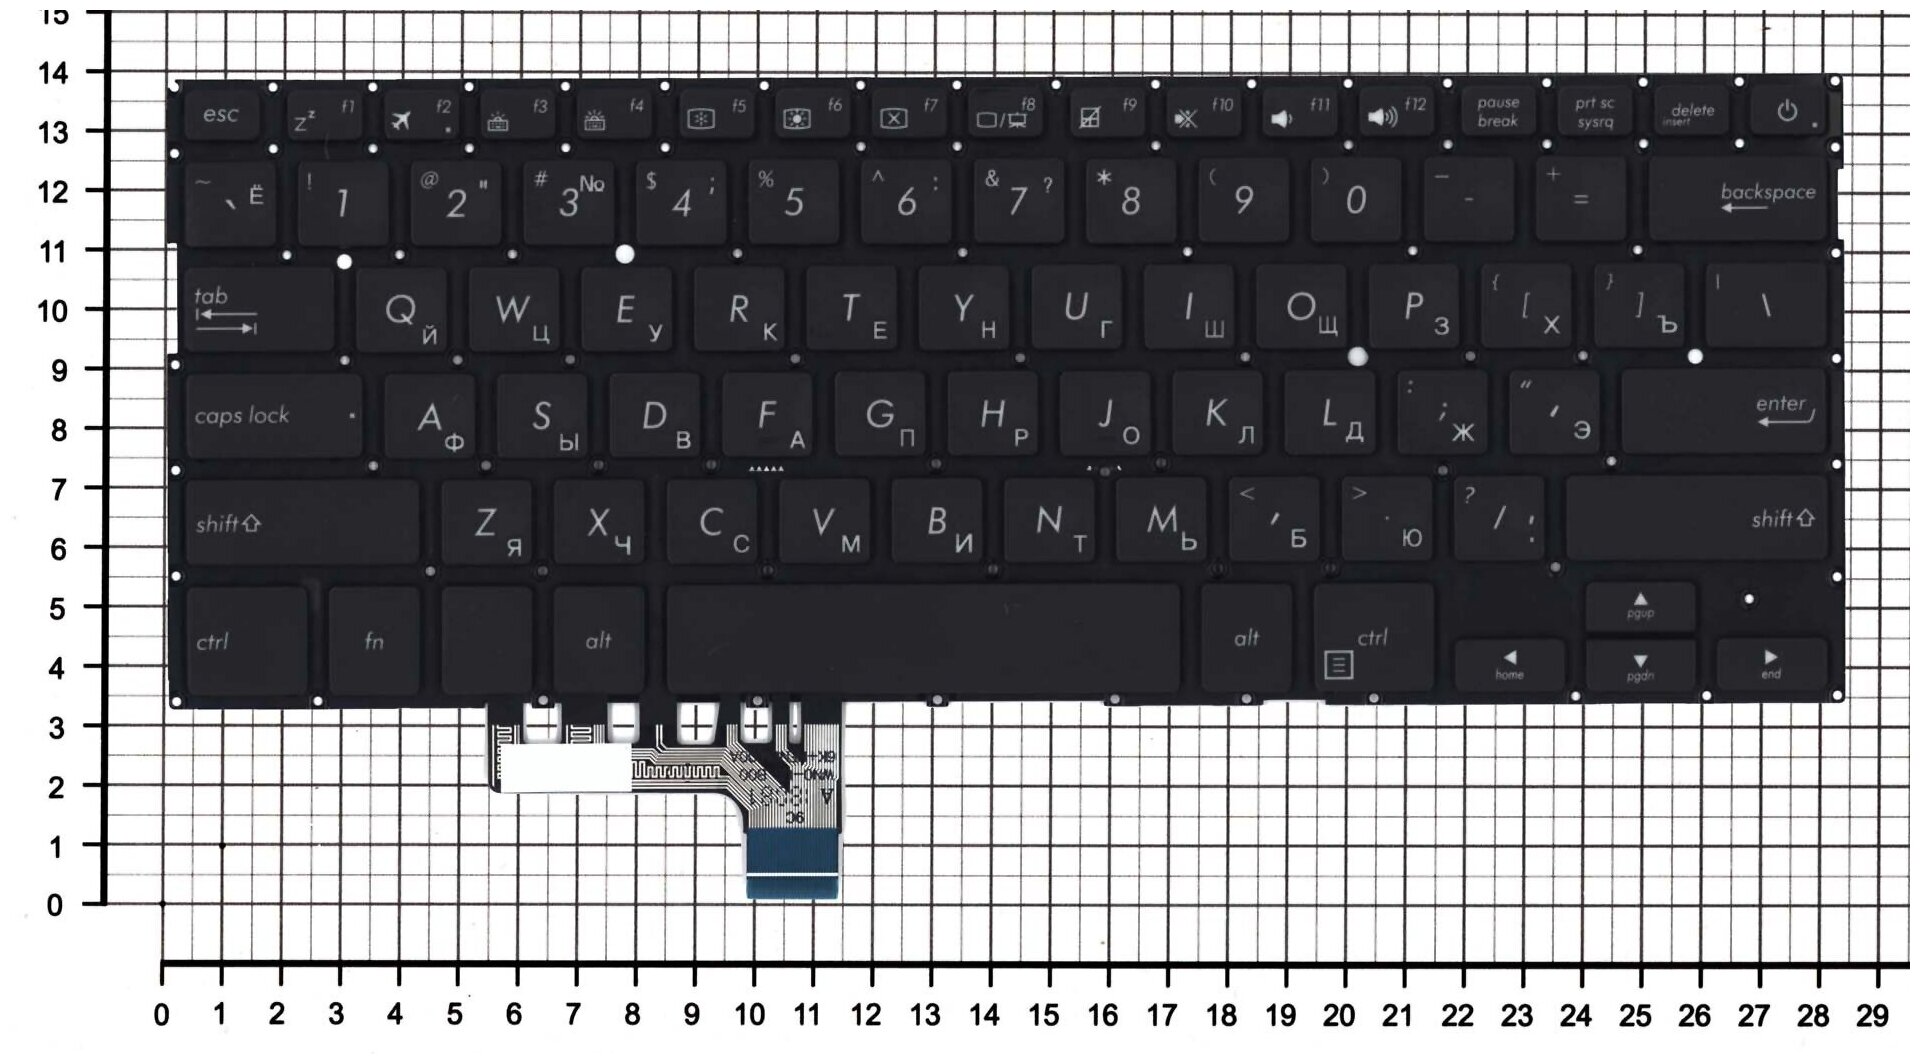 Клавиатура для ноутбука Asus UX331 UX331U UX331UA UX331UN черная под подсветку